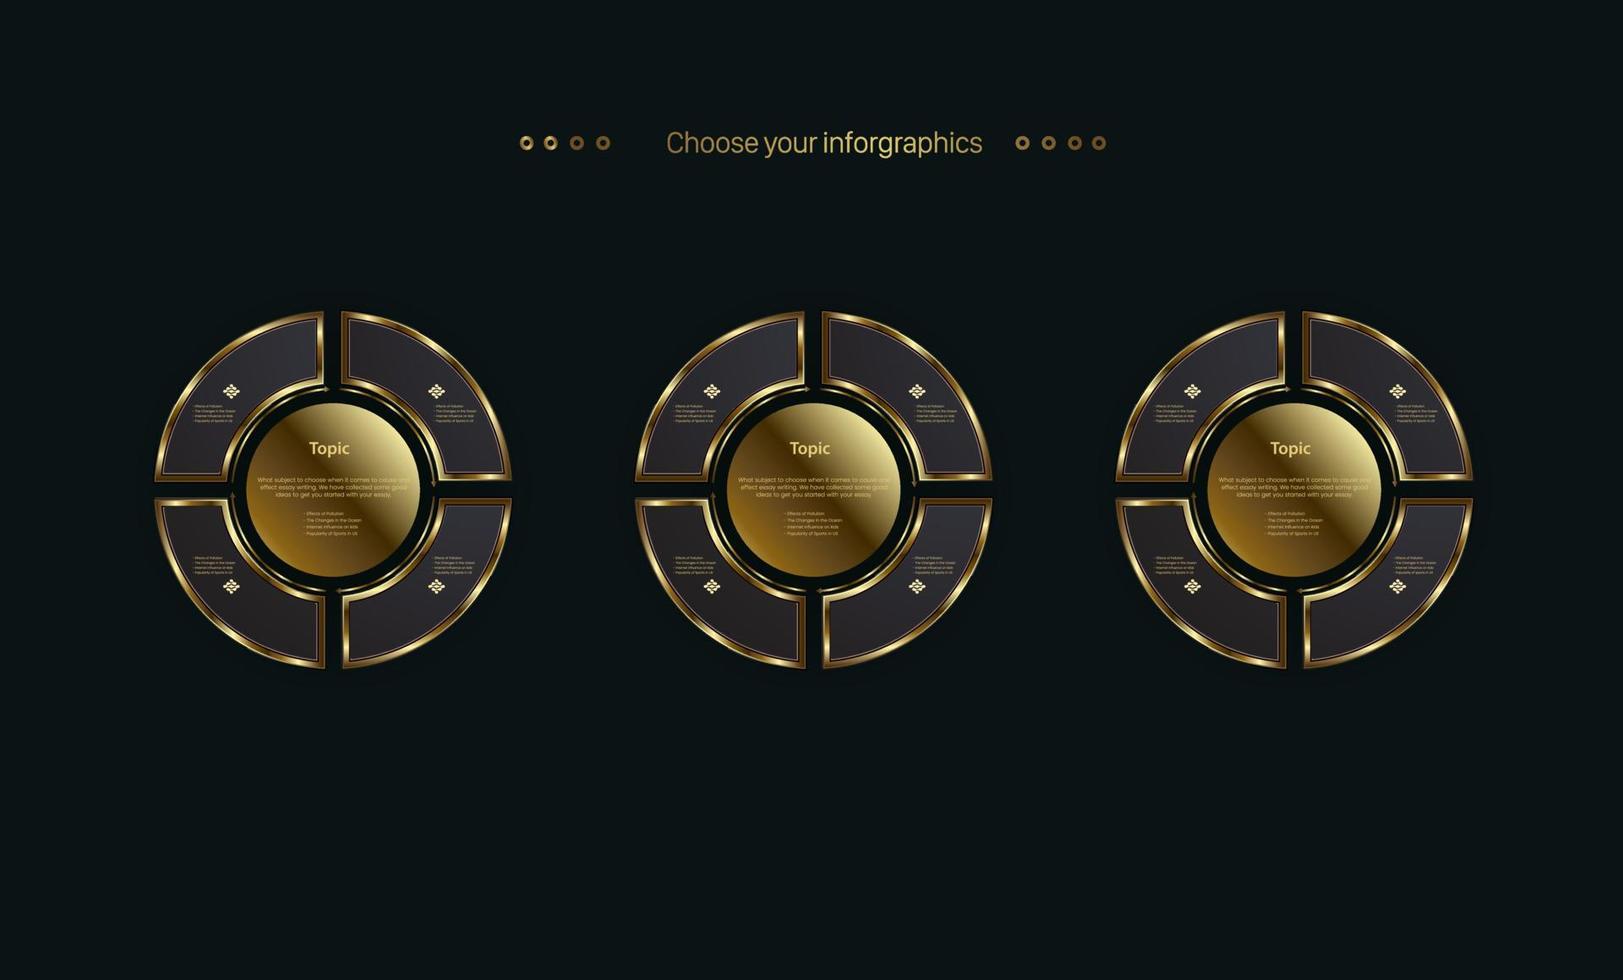 SET of Luxury Golden option Infographic template design. Premium golden levels on a dark background vector